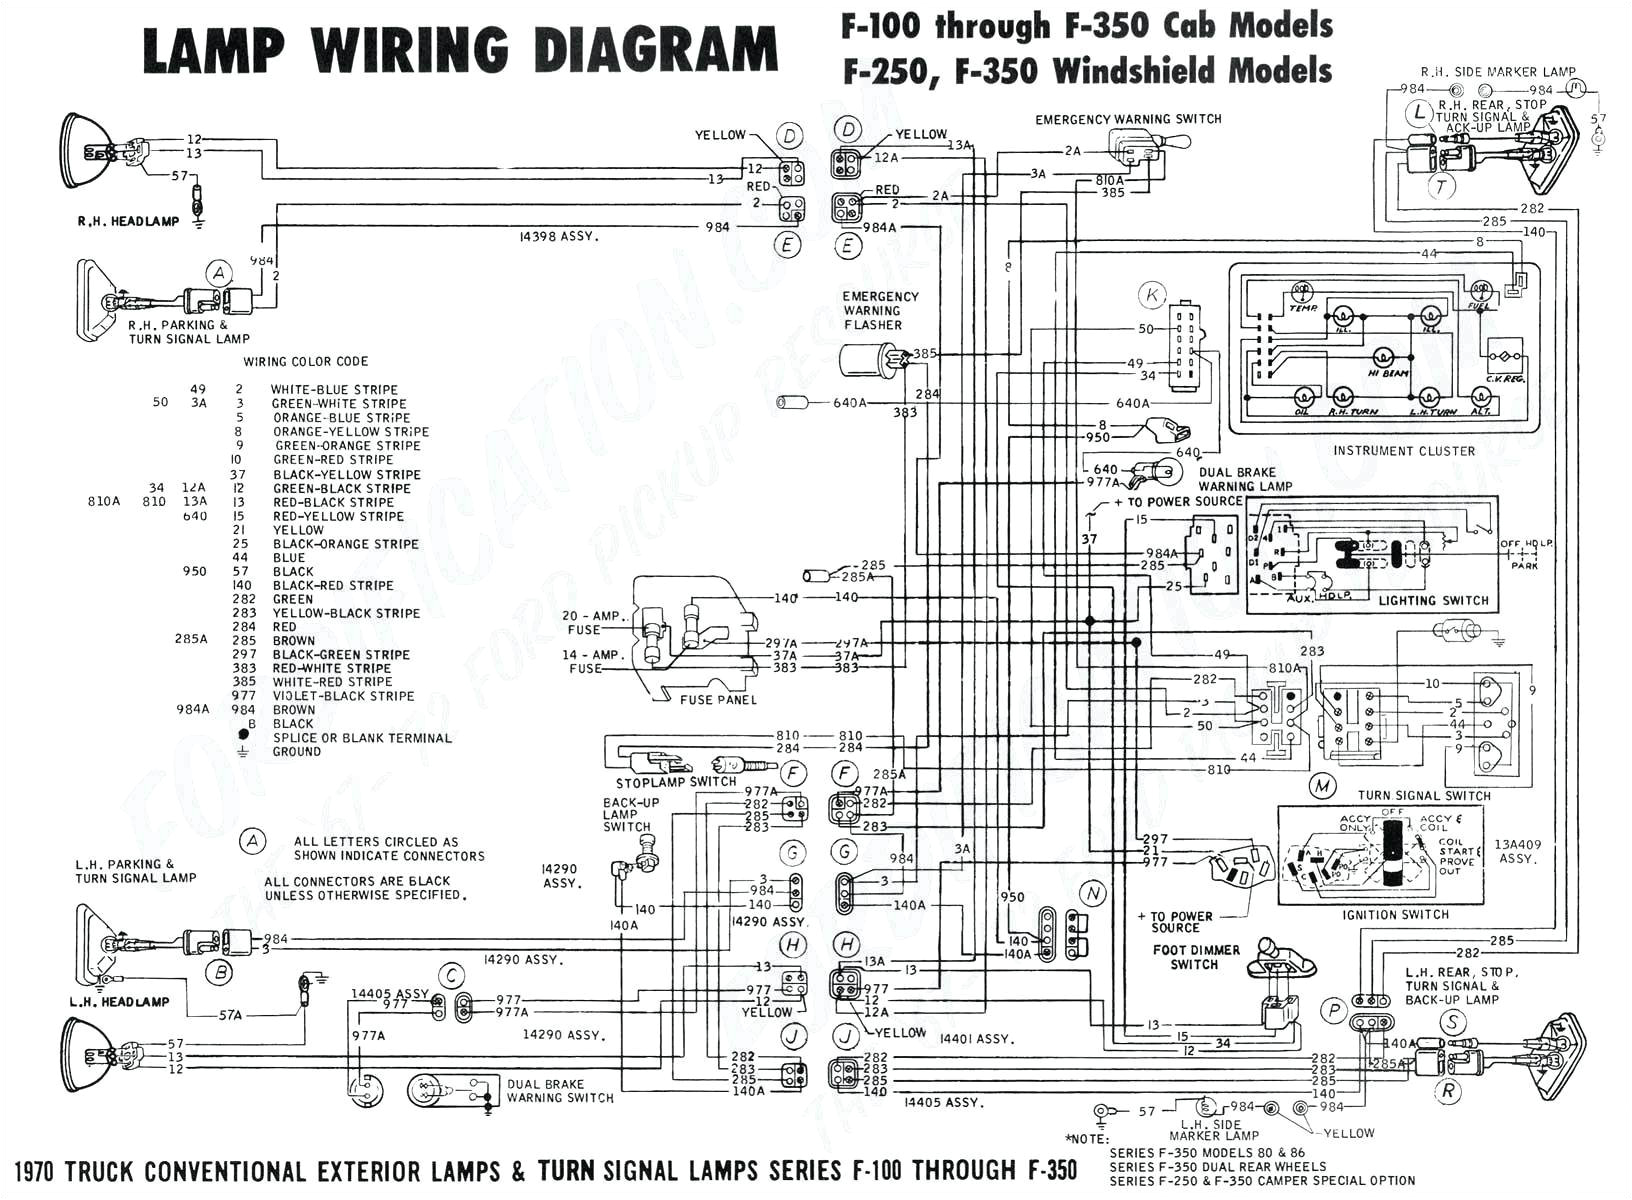 deh p3900mp wiring diagram wiring diagrampioneer deh p3900mp wiring diagram wiring diagramdeh p3900mp wiring diagram wiring